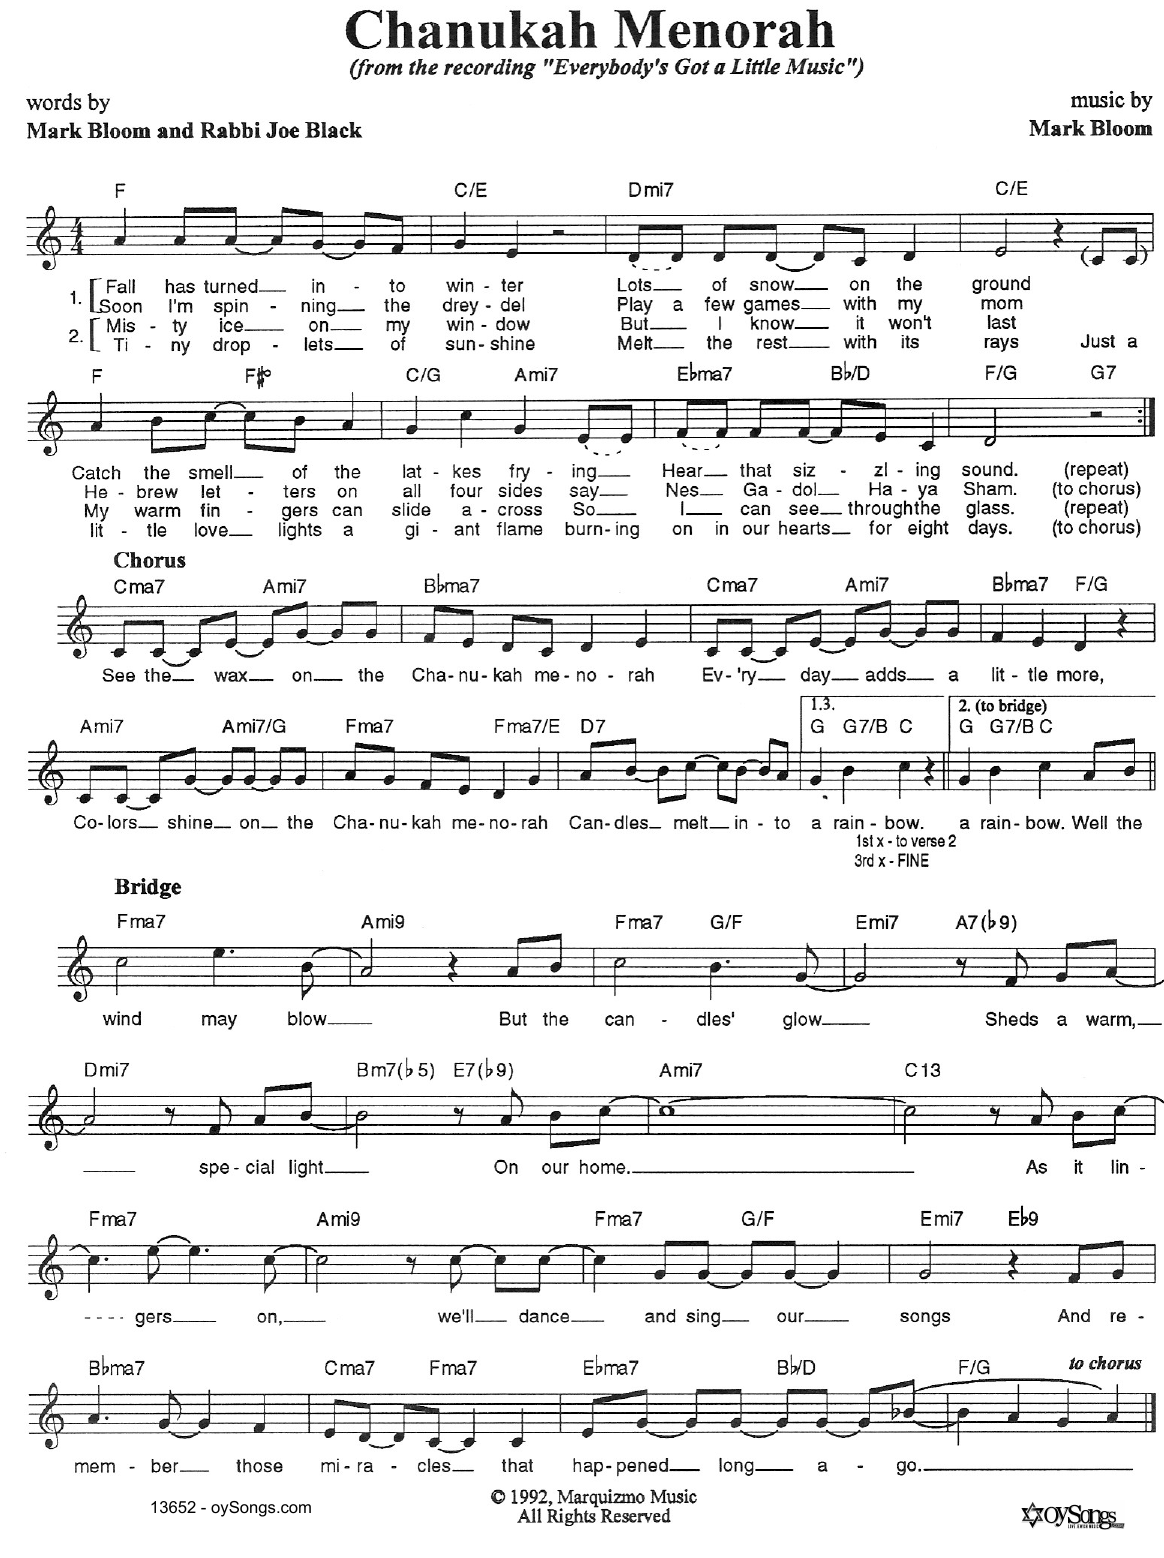 Download Joe Black Chanukah Menorah Sheet Music and learn how to play Melody Line, Lyrics & Chords PDF digital score in minutes